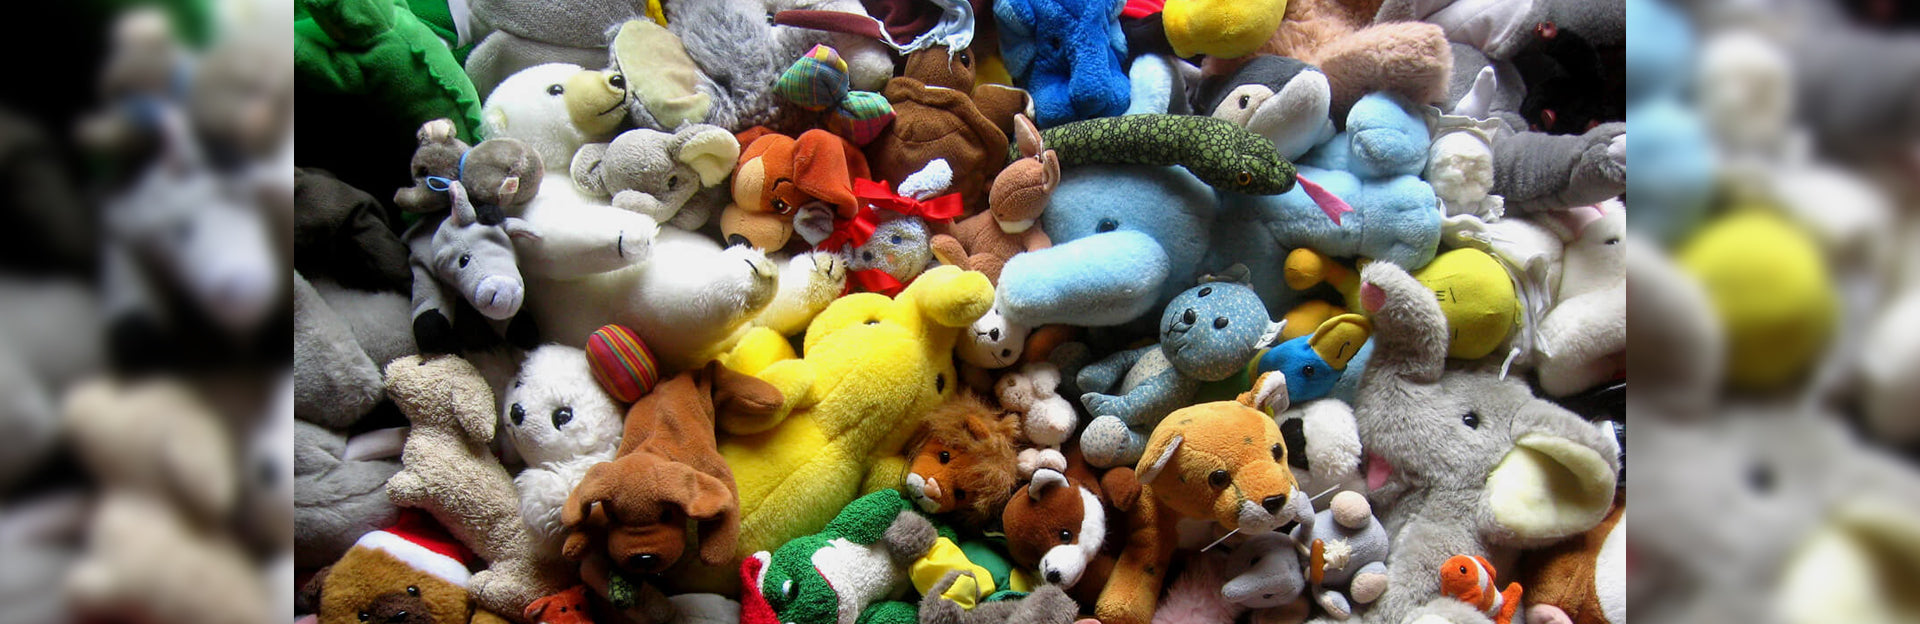 Cleaning Stuffed Animals, Stuffed Animal Care